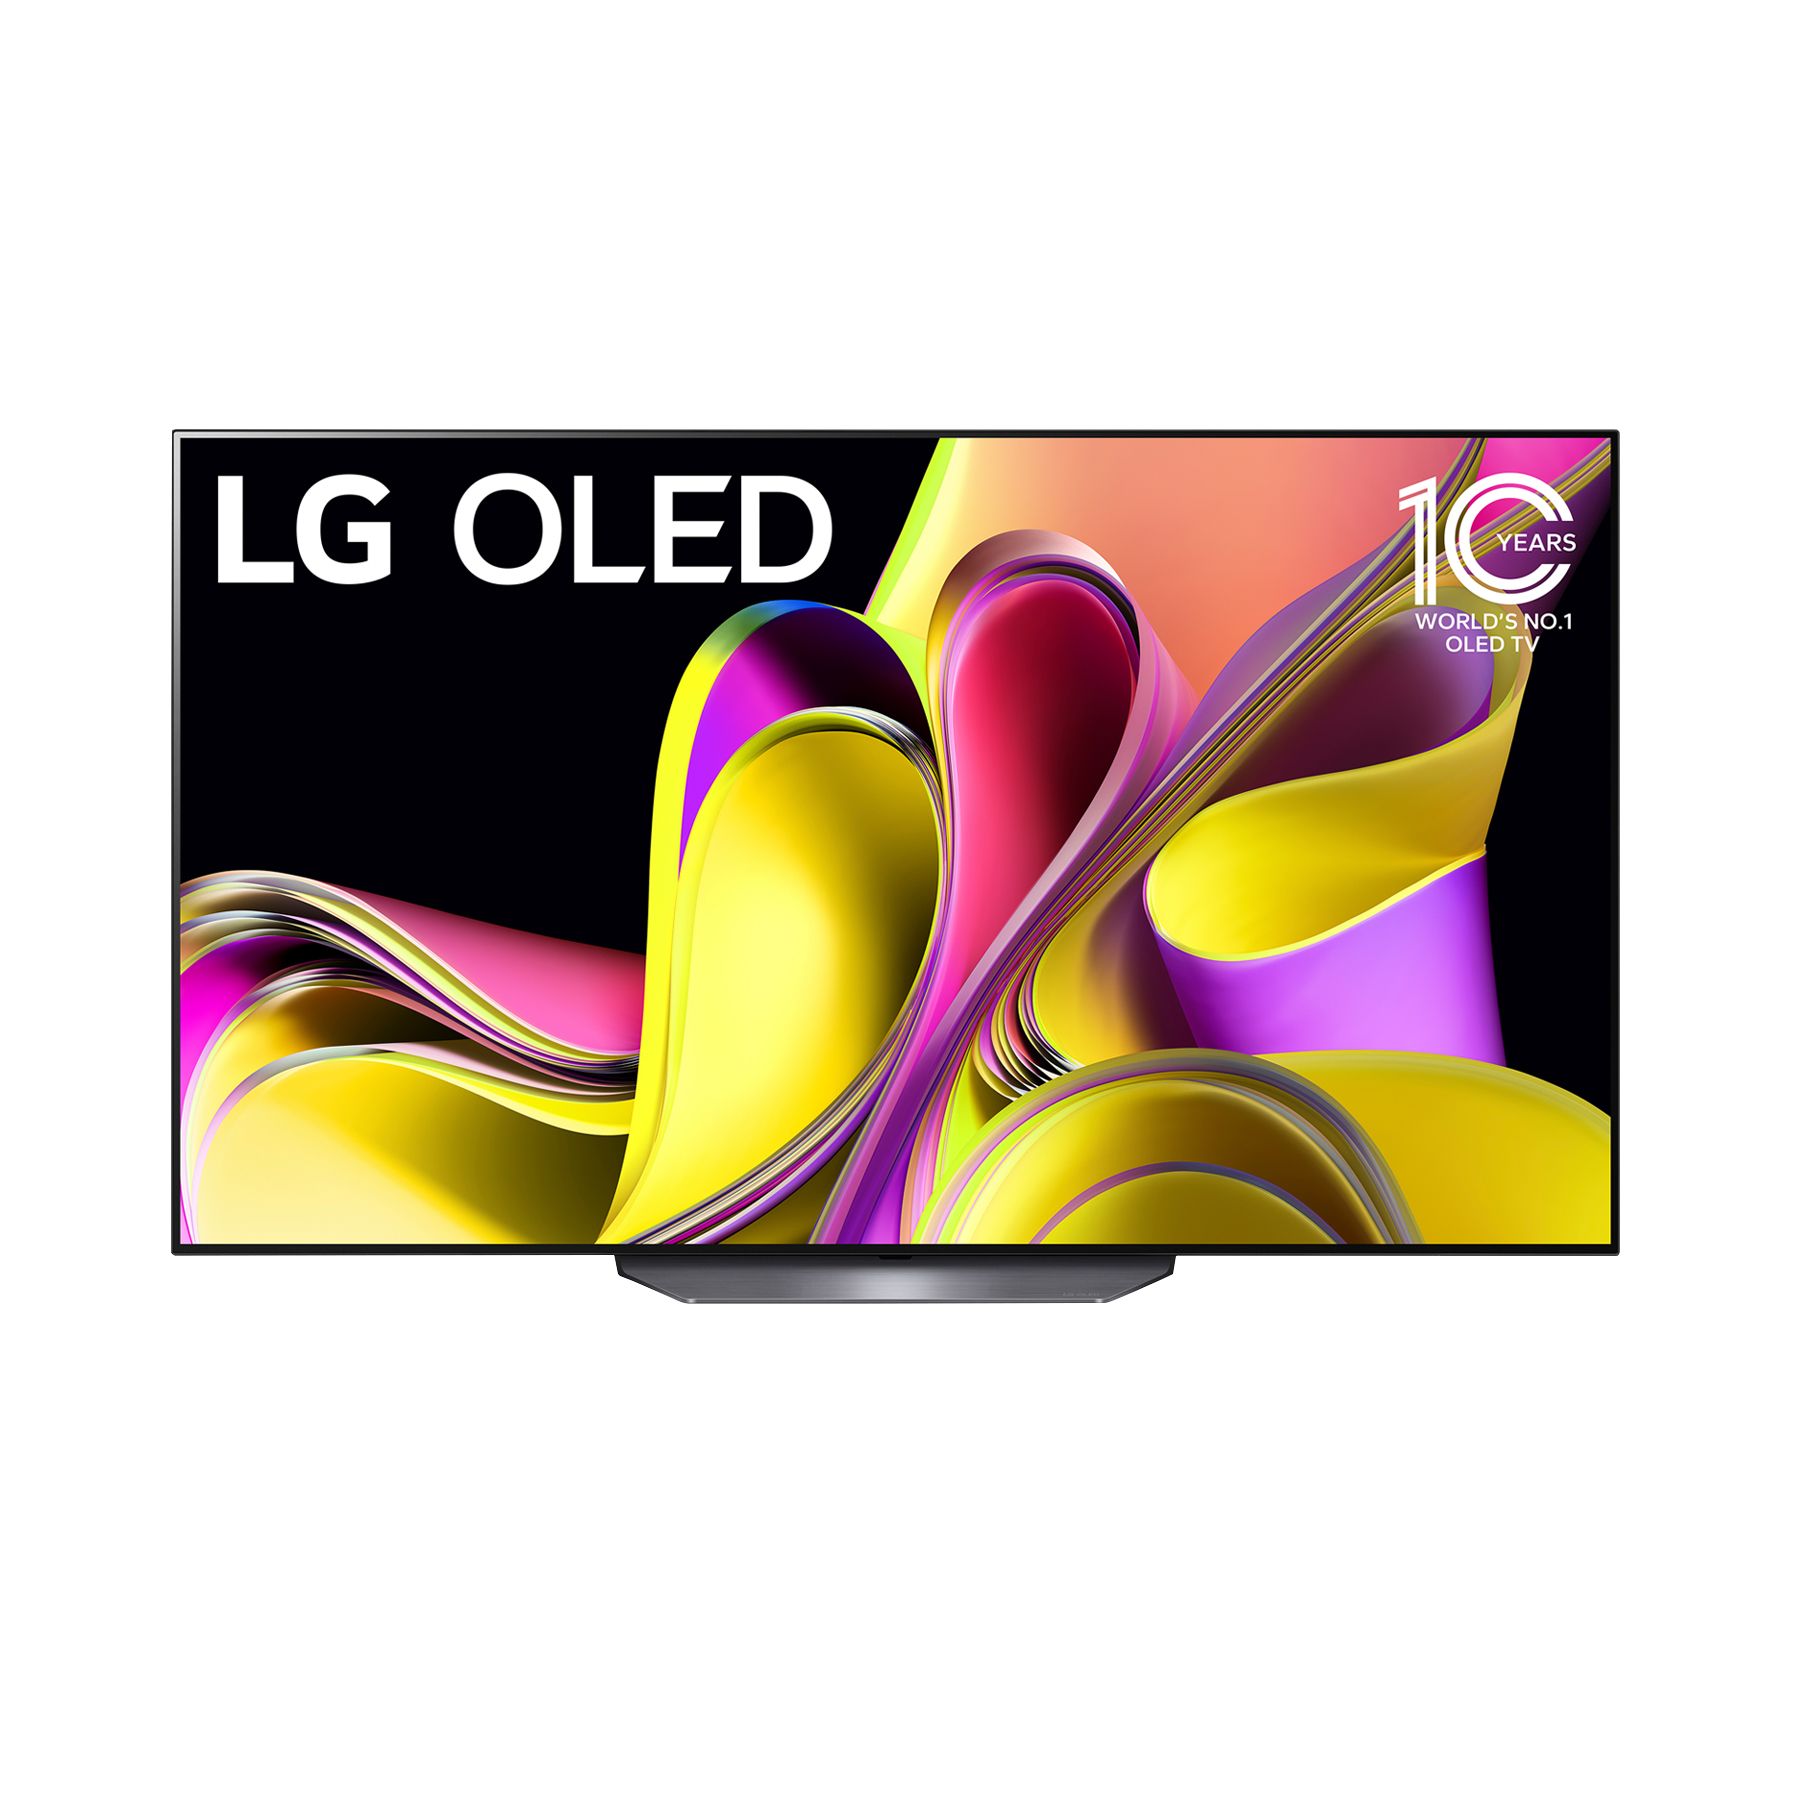 LG UHD 4K Smart TV 65-Inch NanoCell 80 Series - 65NANO80A